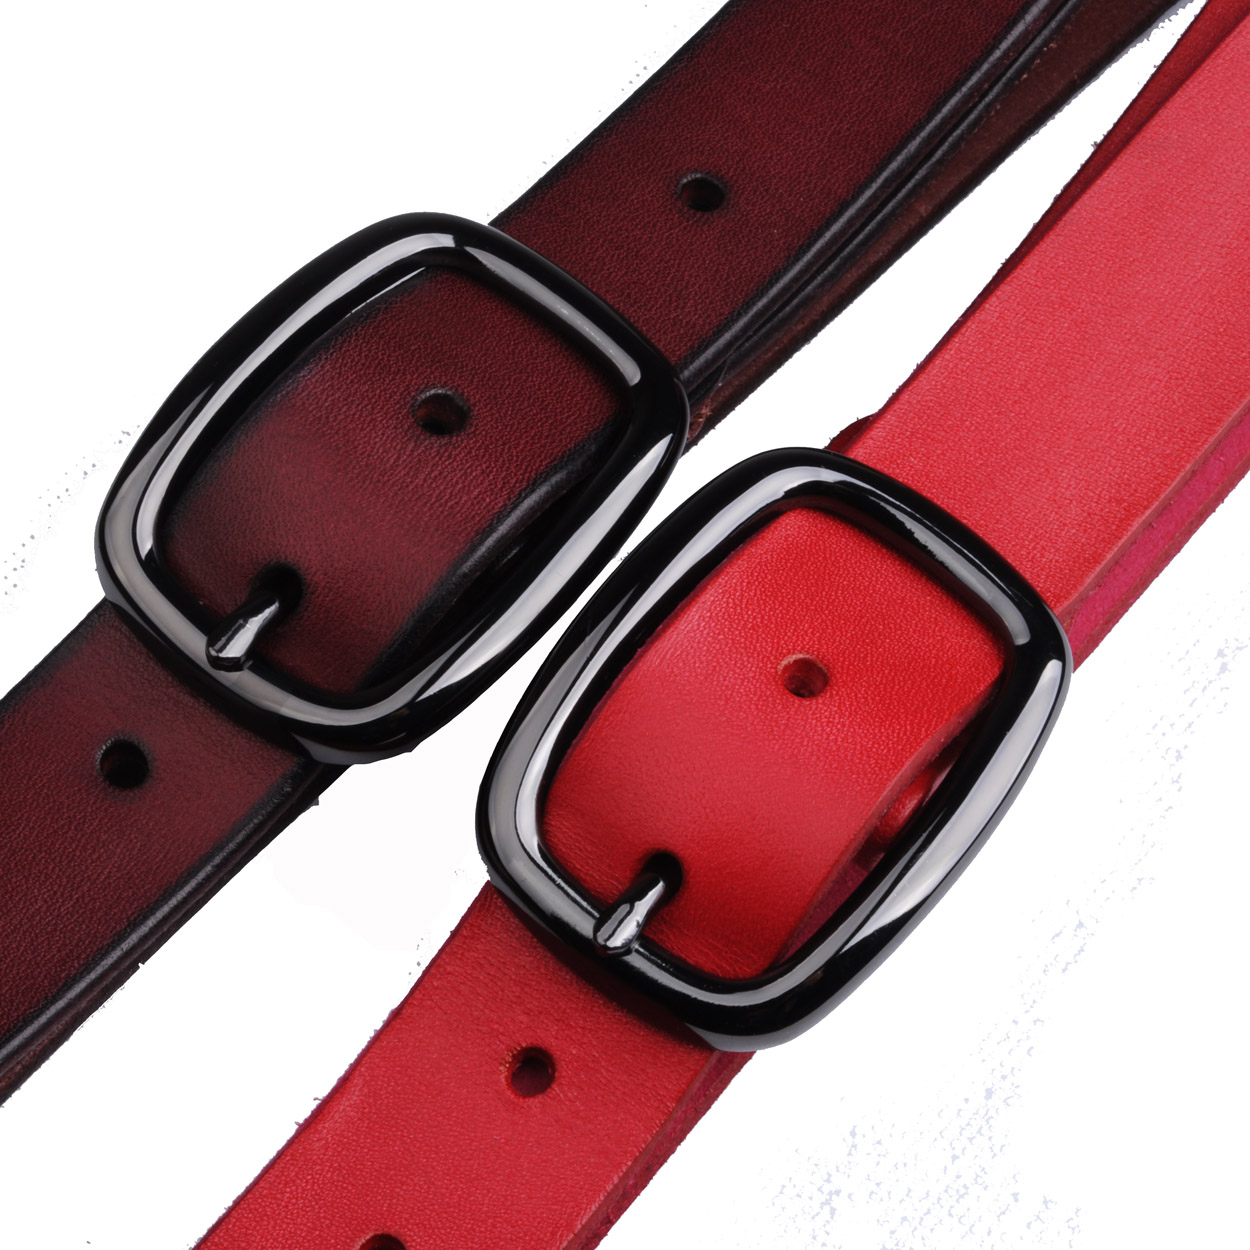 Strap Women genuine leather all-match genuine leather fashion genuine leather sweet red belt